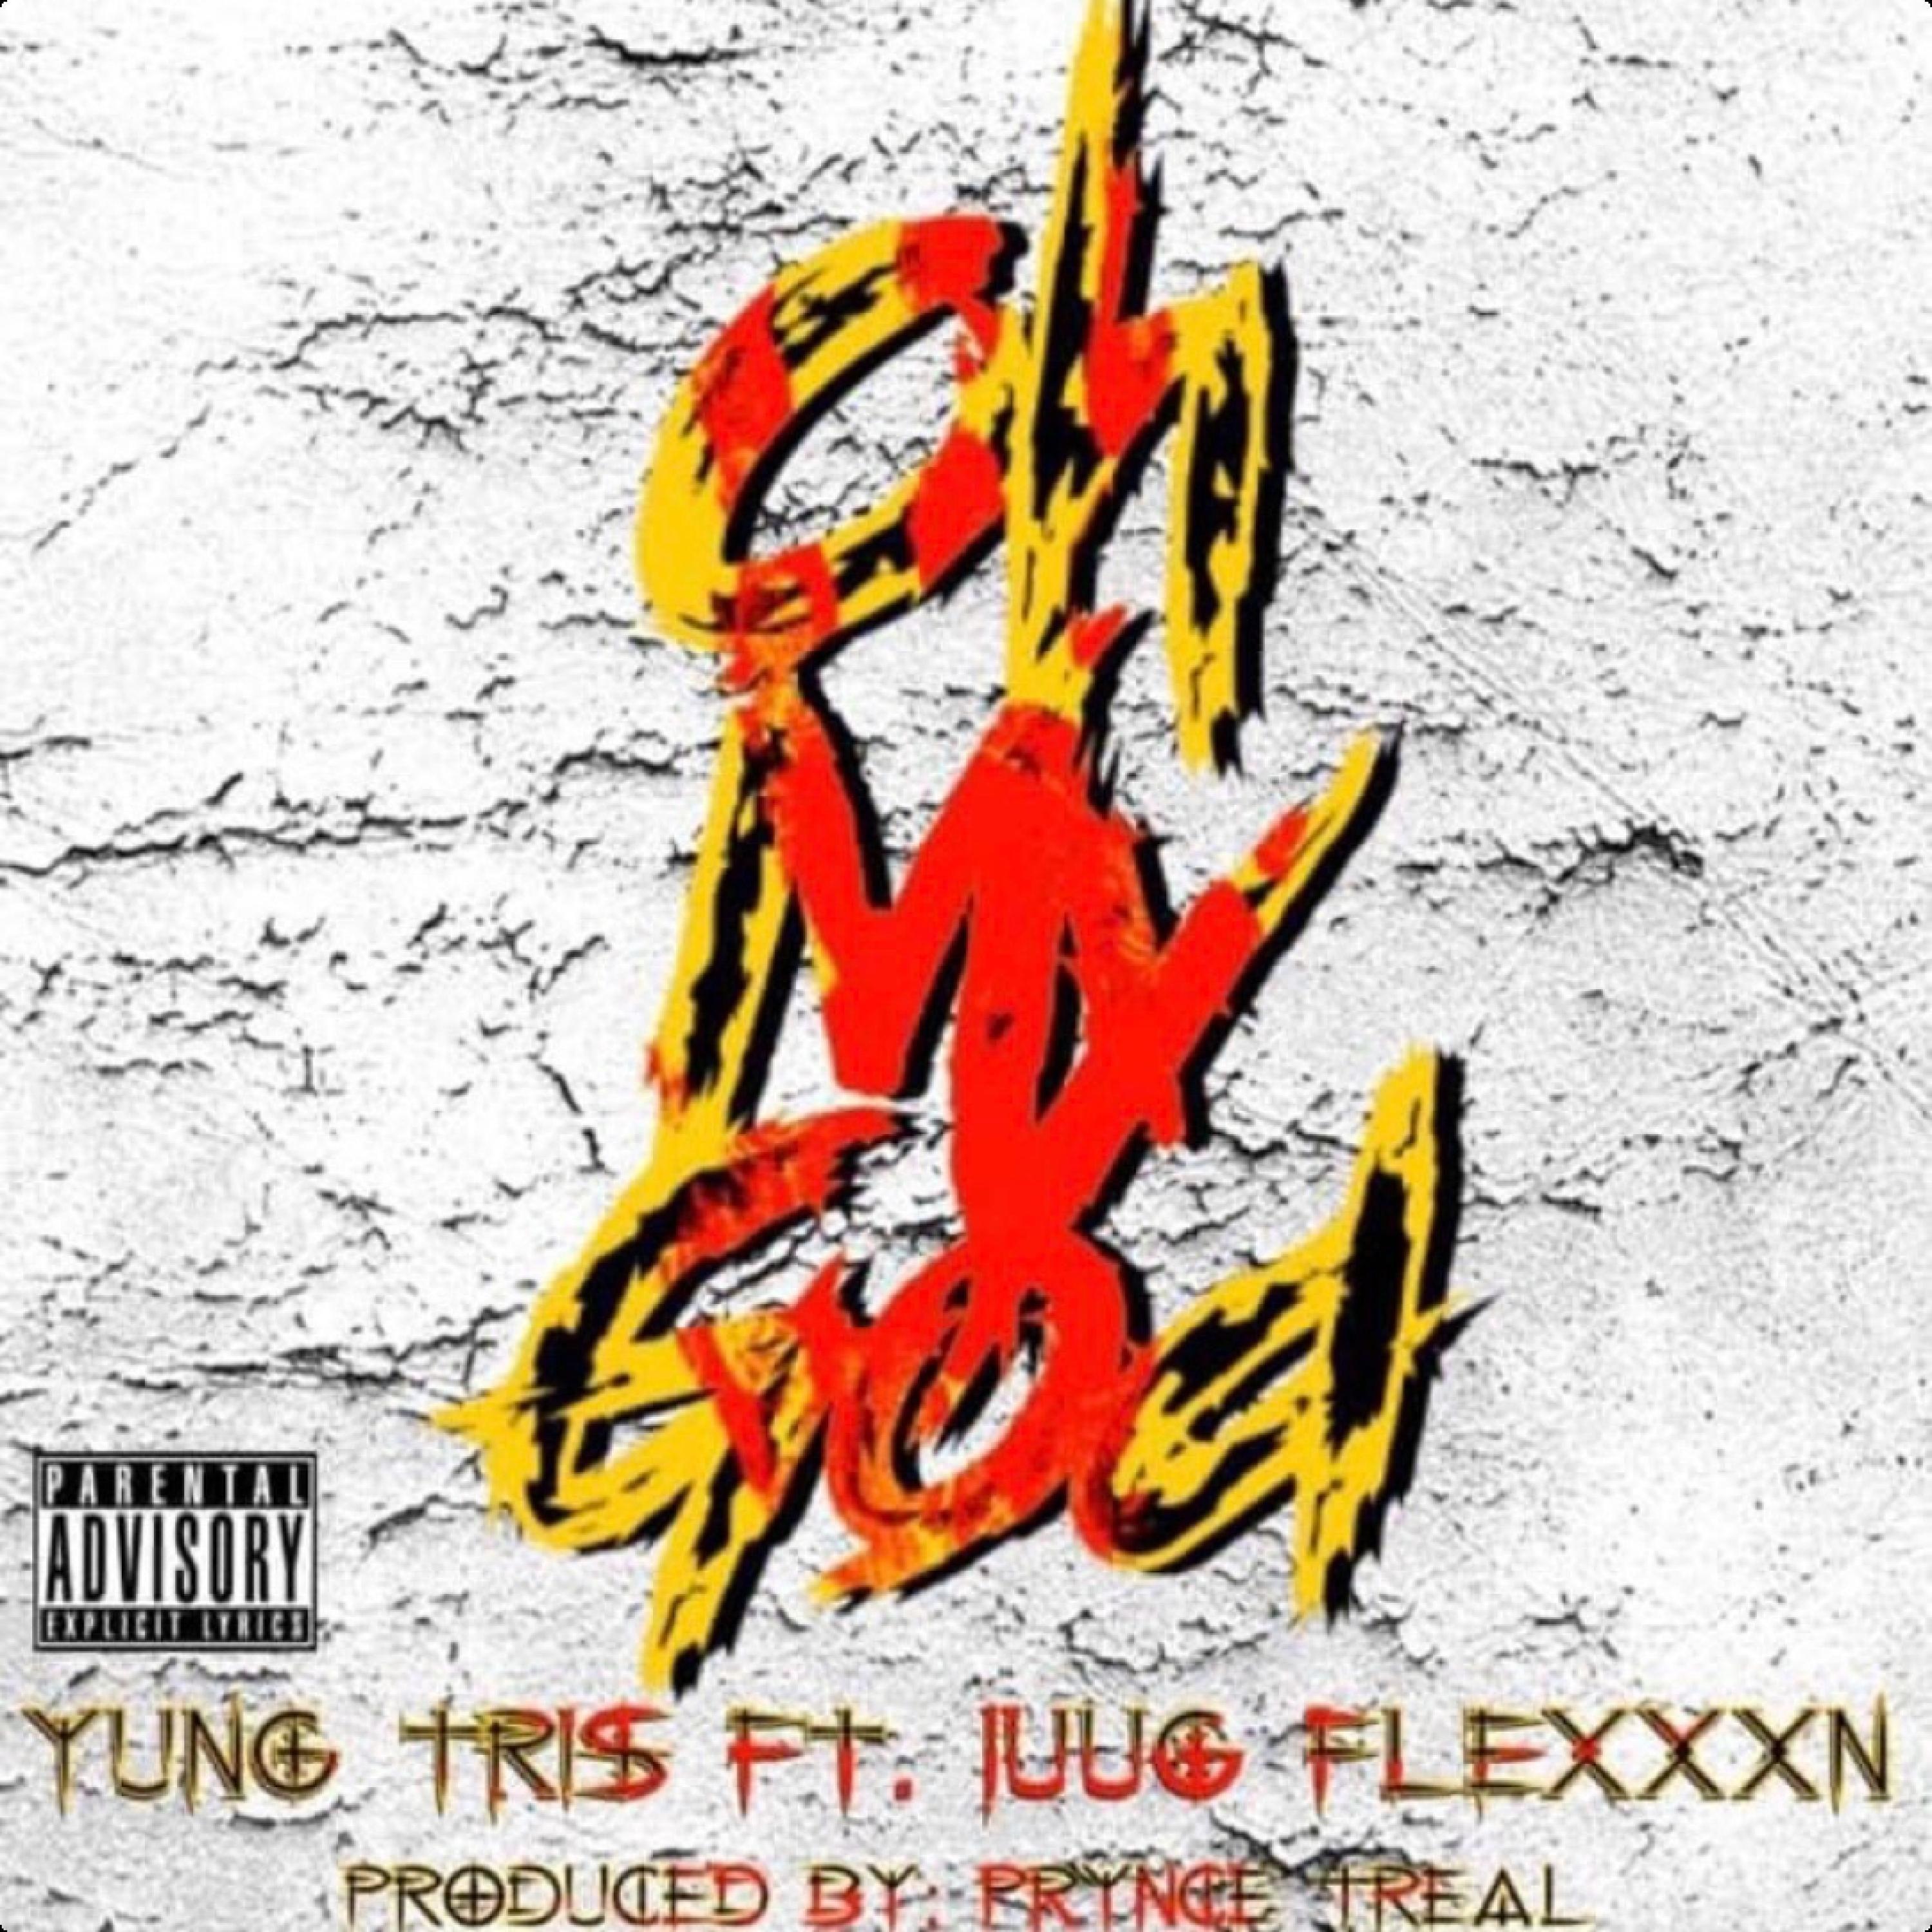 Yung Tris - Oh My God (feat. Juug Flexxxn)